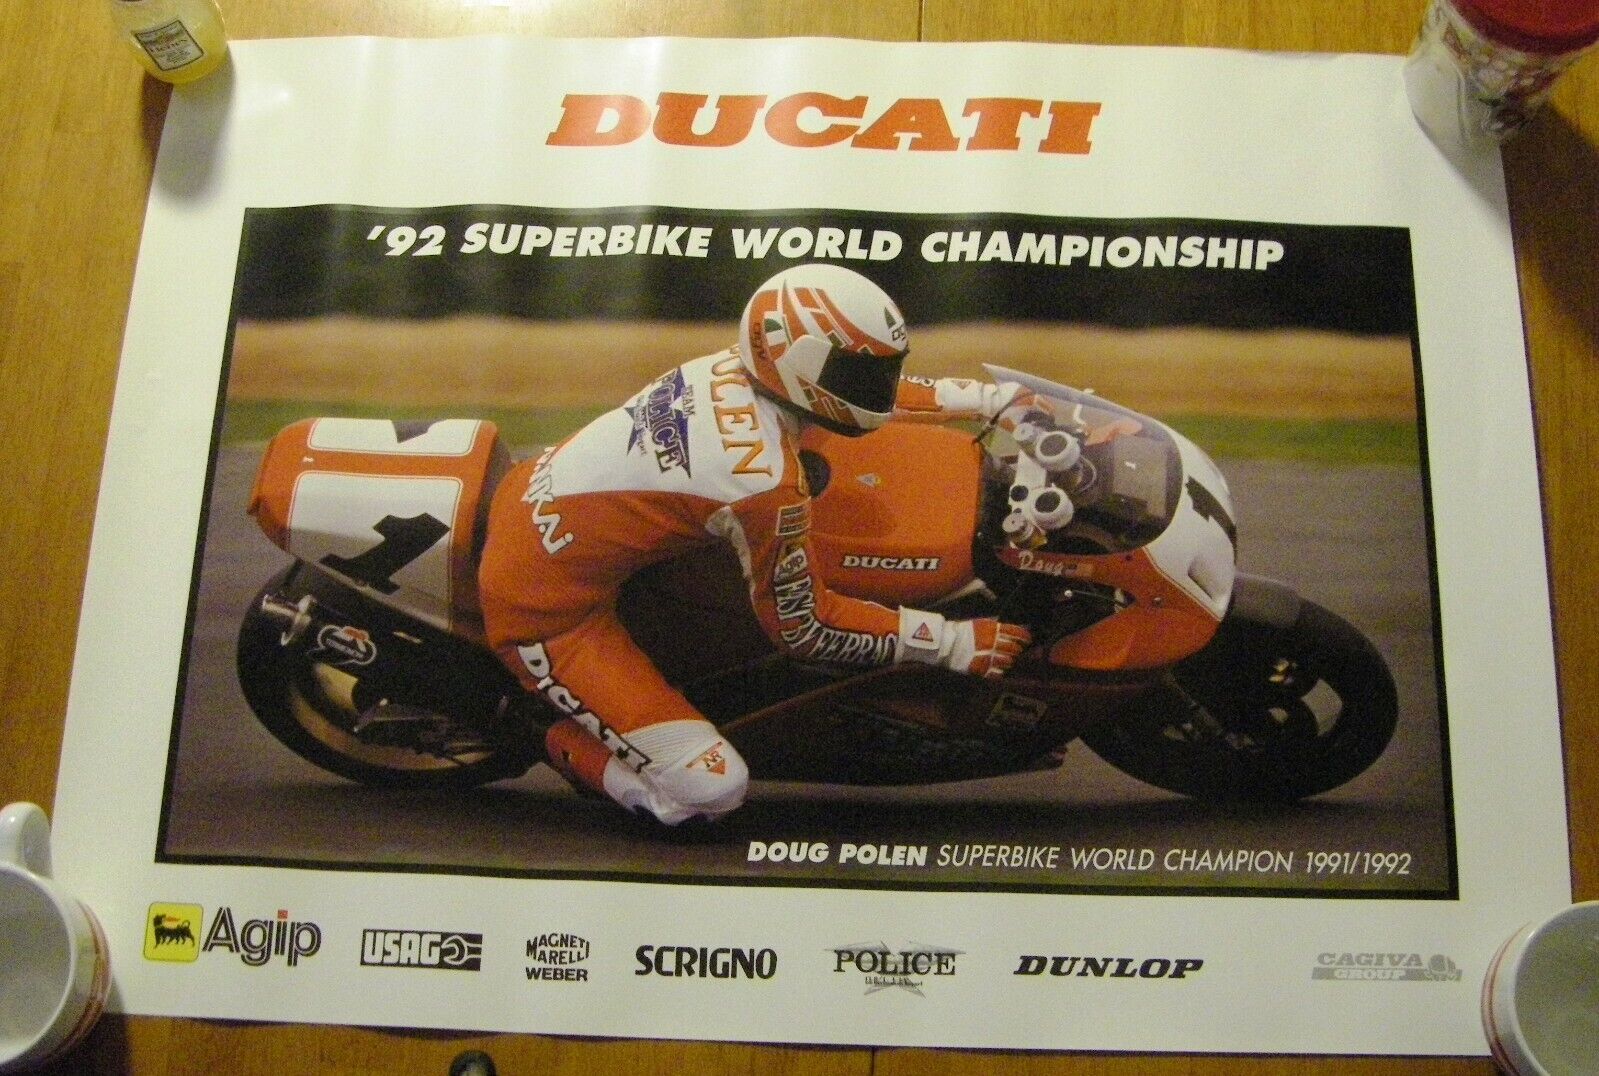 Ducati  * DOUG POLEN * 1992 Superbike World Champion 